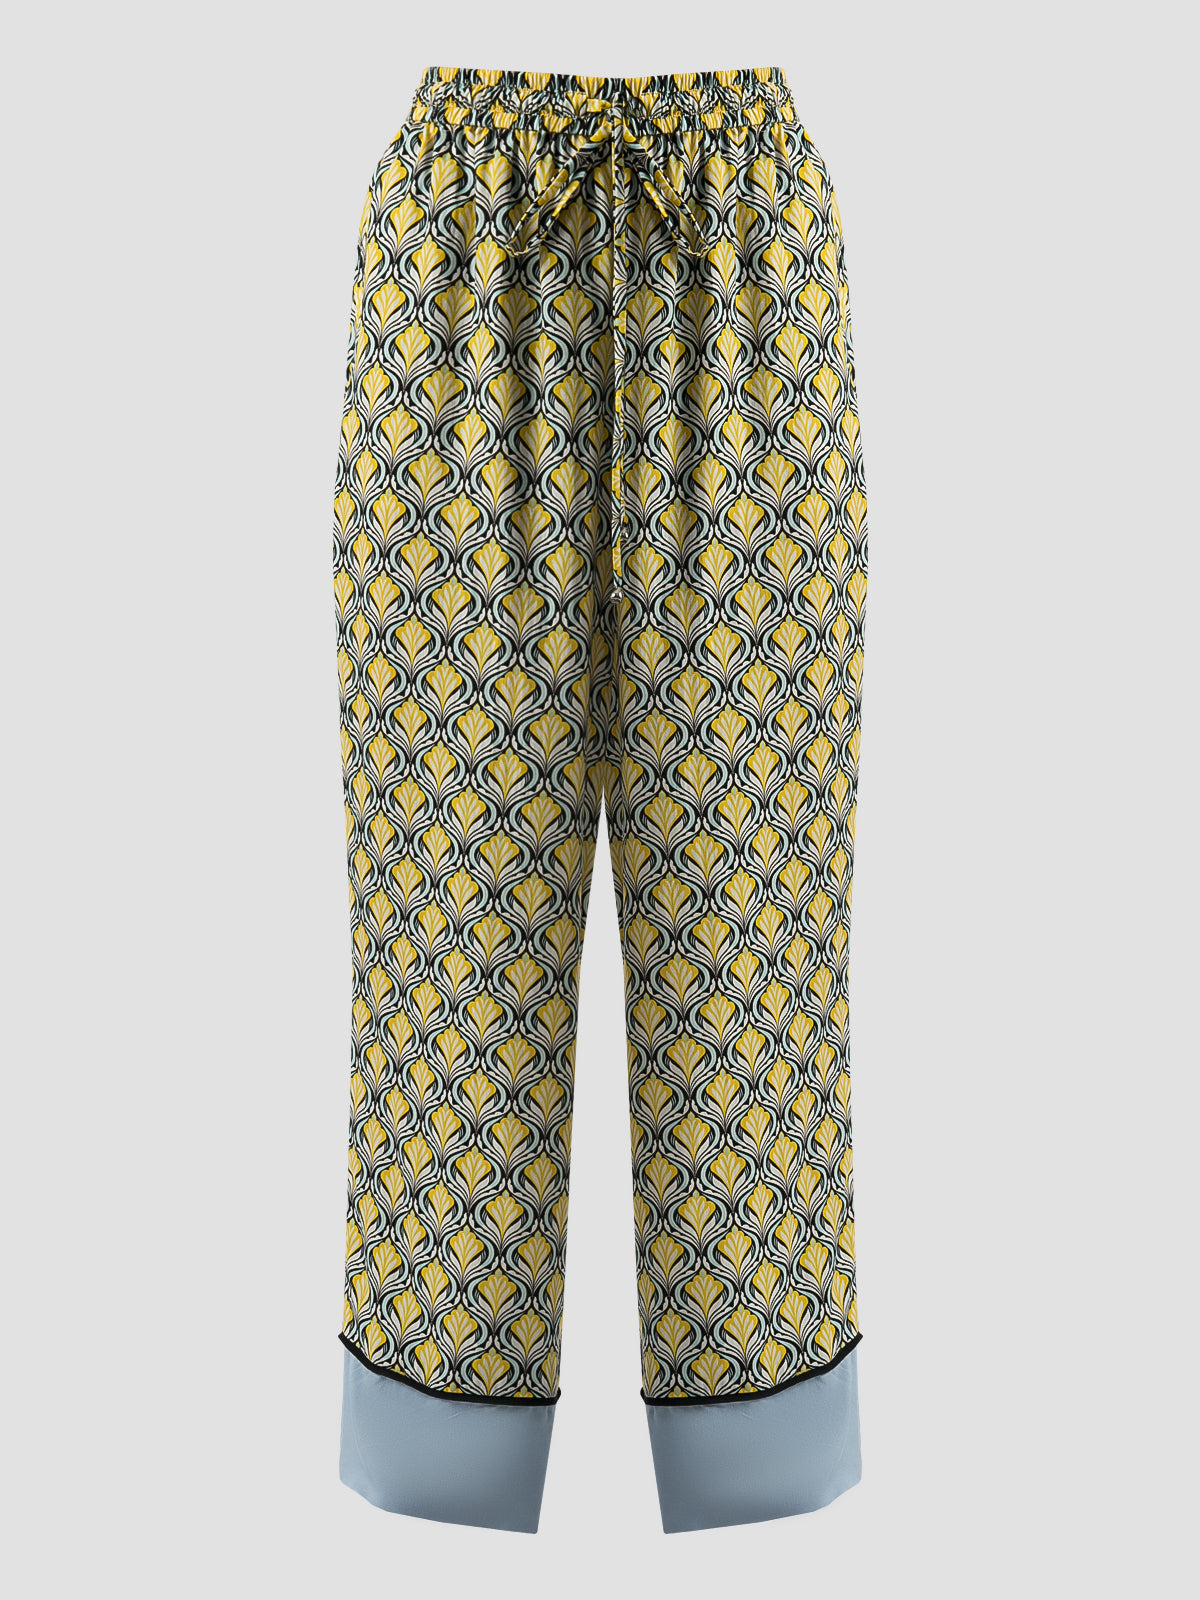 Biva Long Pants In Yellow-Black